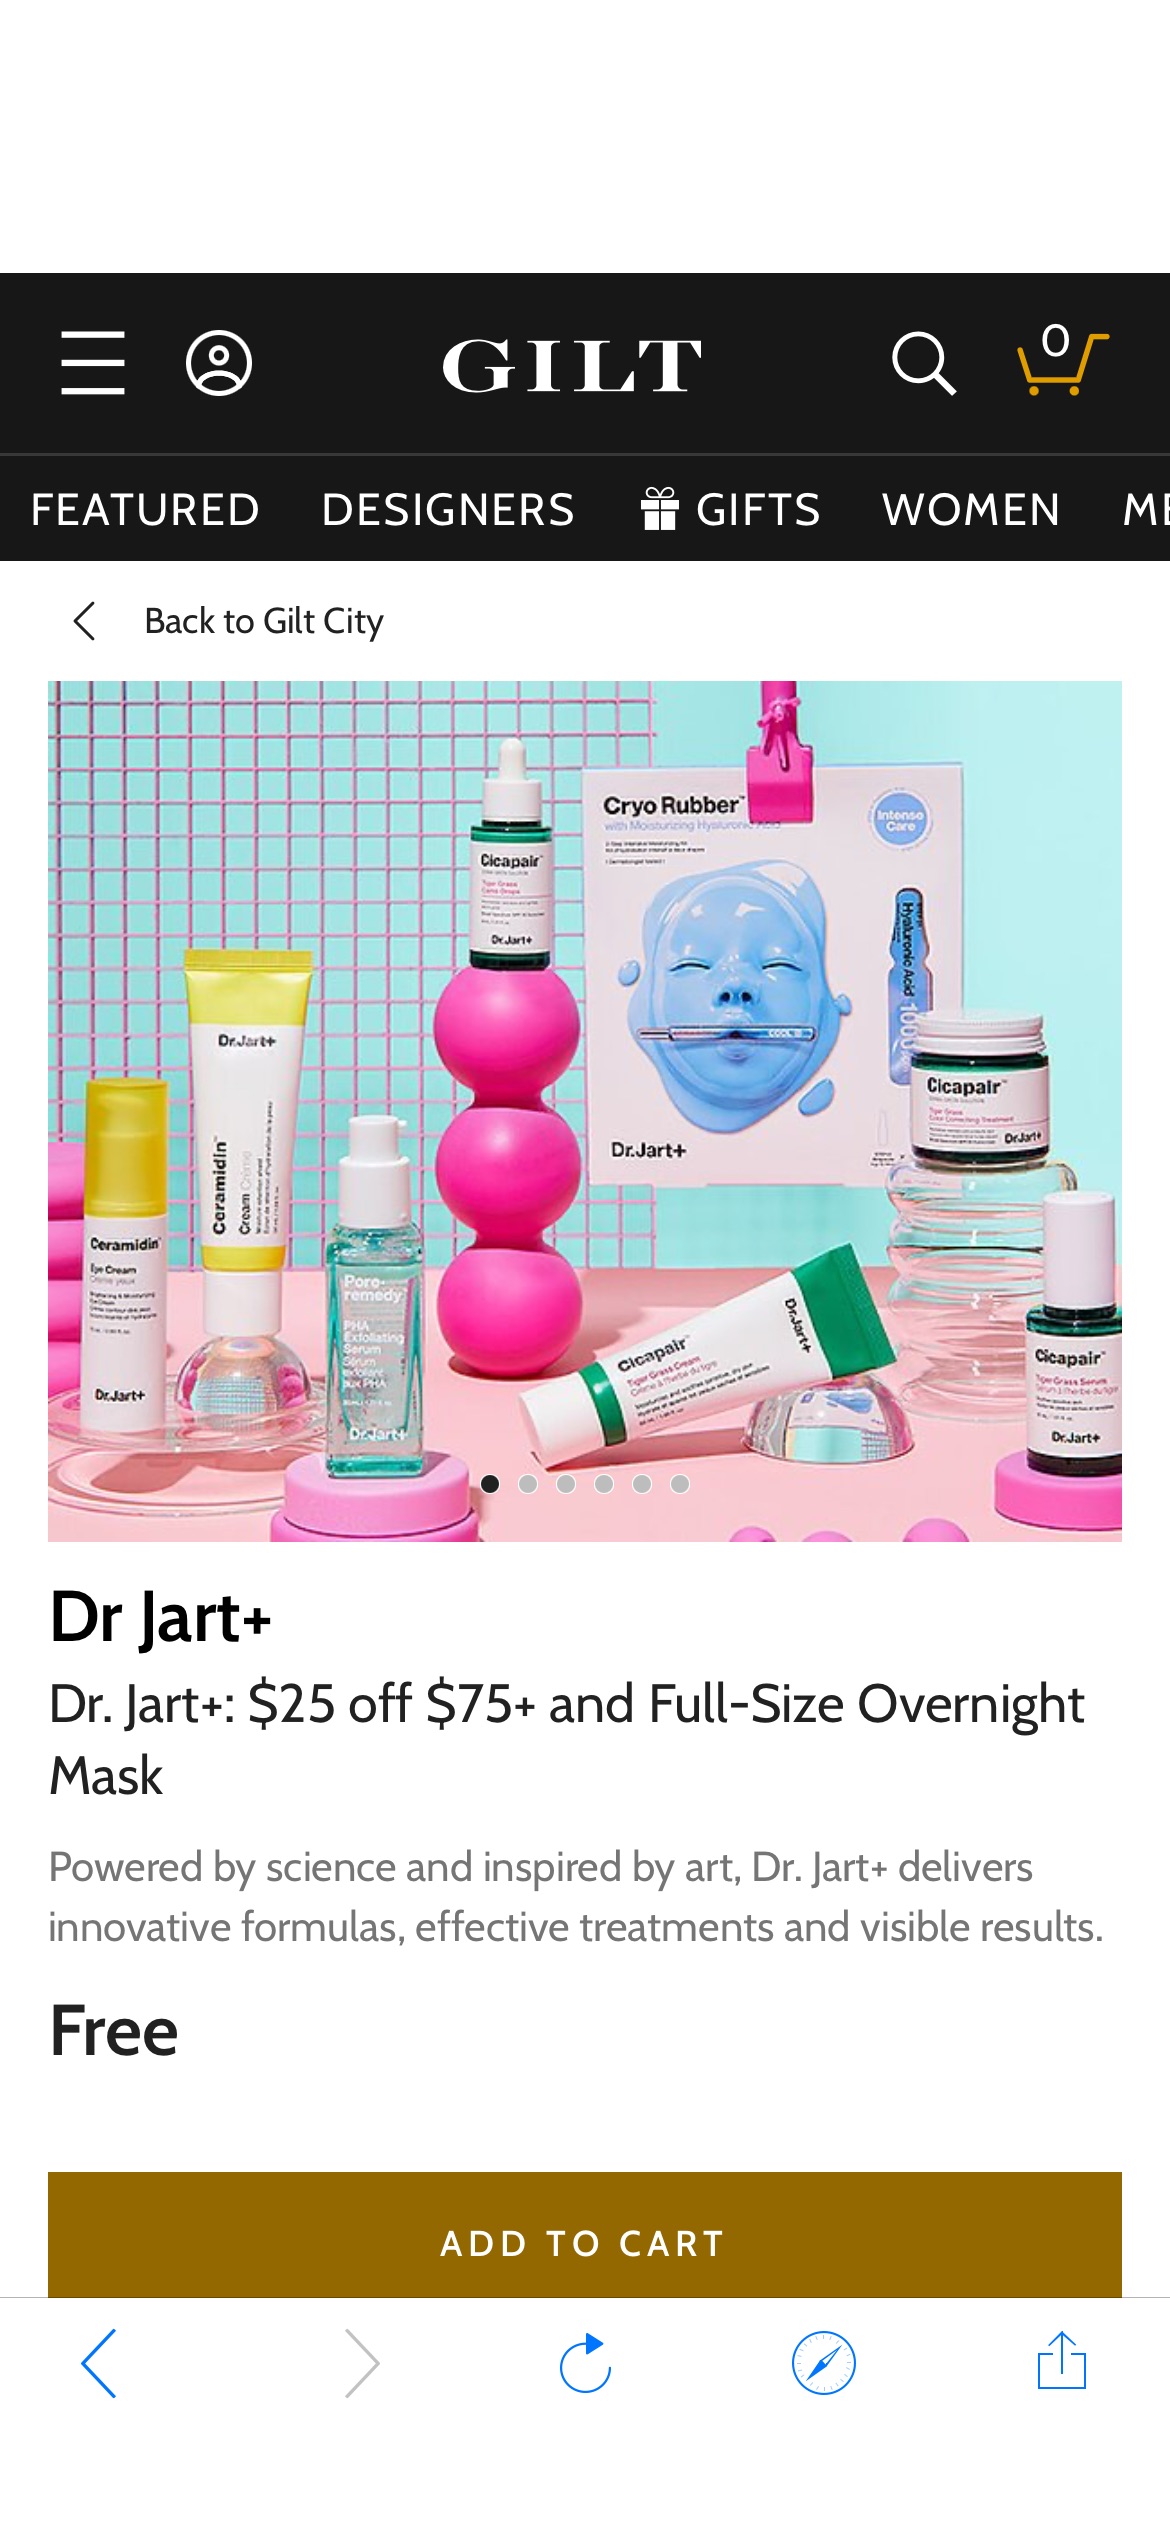 Dr. Jart+: $25 off $75+ and Full-Size Overnight Mask / Gilt现有Dr. Jart+官网消费满$75减$25 优惠券领取，并送一件正装礼品